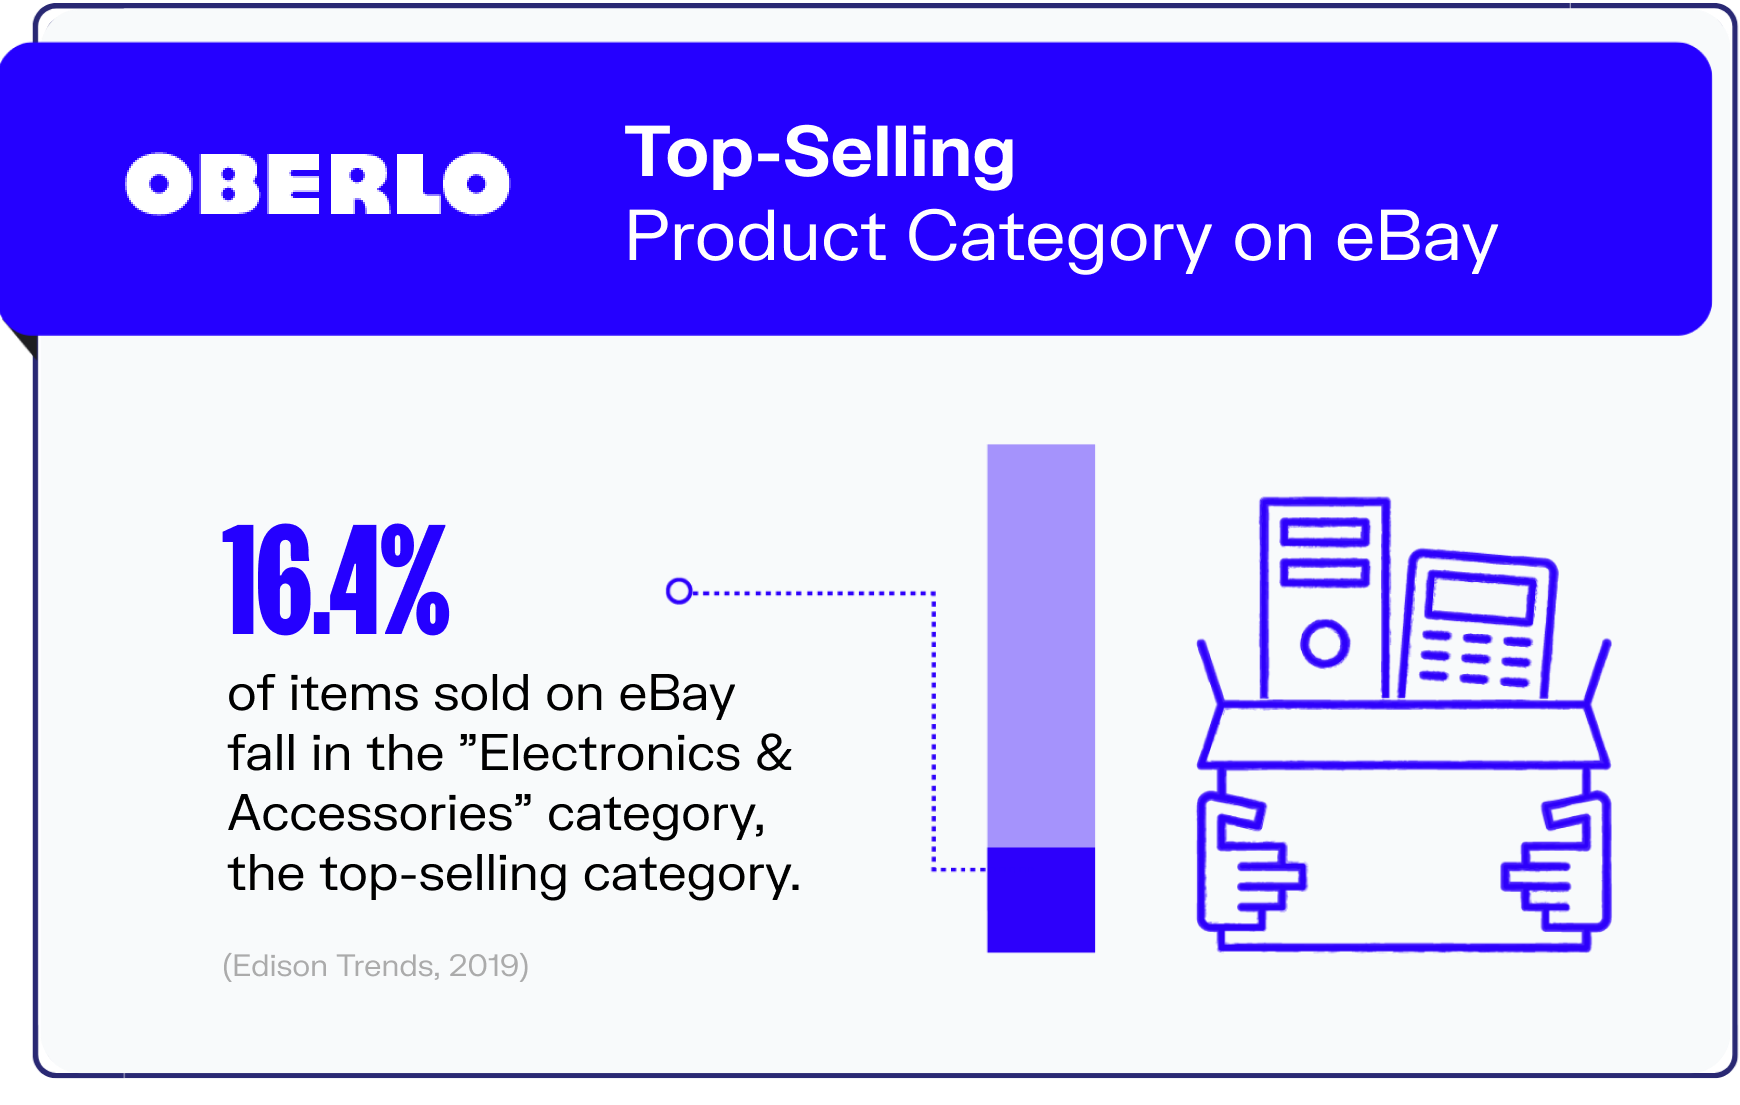 ebay statistics graphic3